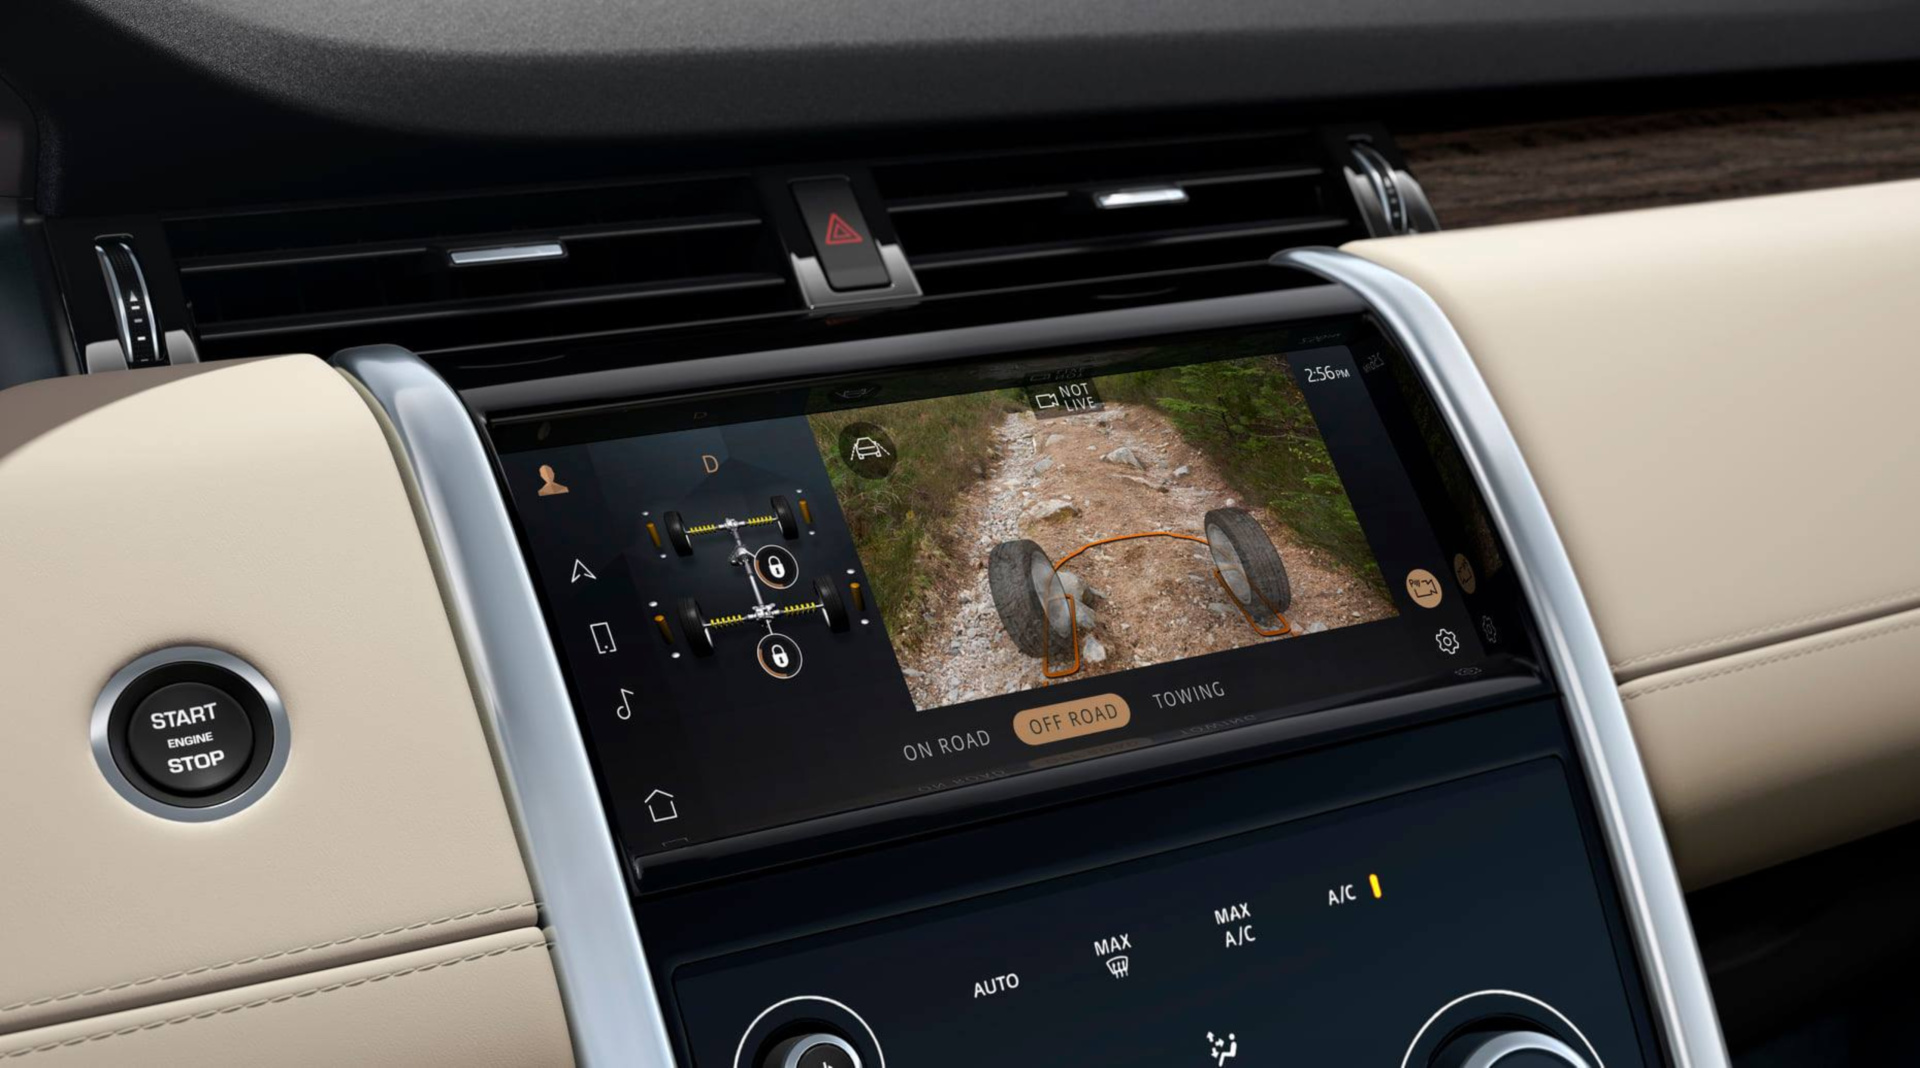 SMALL_圖 4 - 全新 2021 年式 Range Rover Evoque 與 Discovery Sport 升級標配 360º 3D 環景顯示含 ClearSight 對地視野與水深偵測系統。